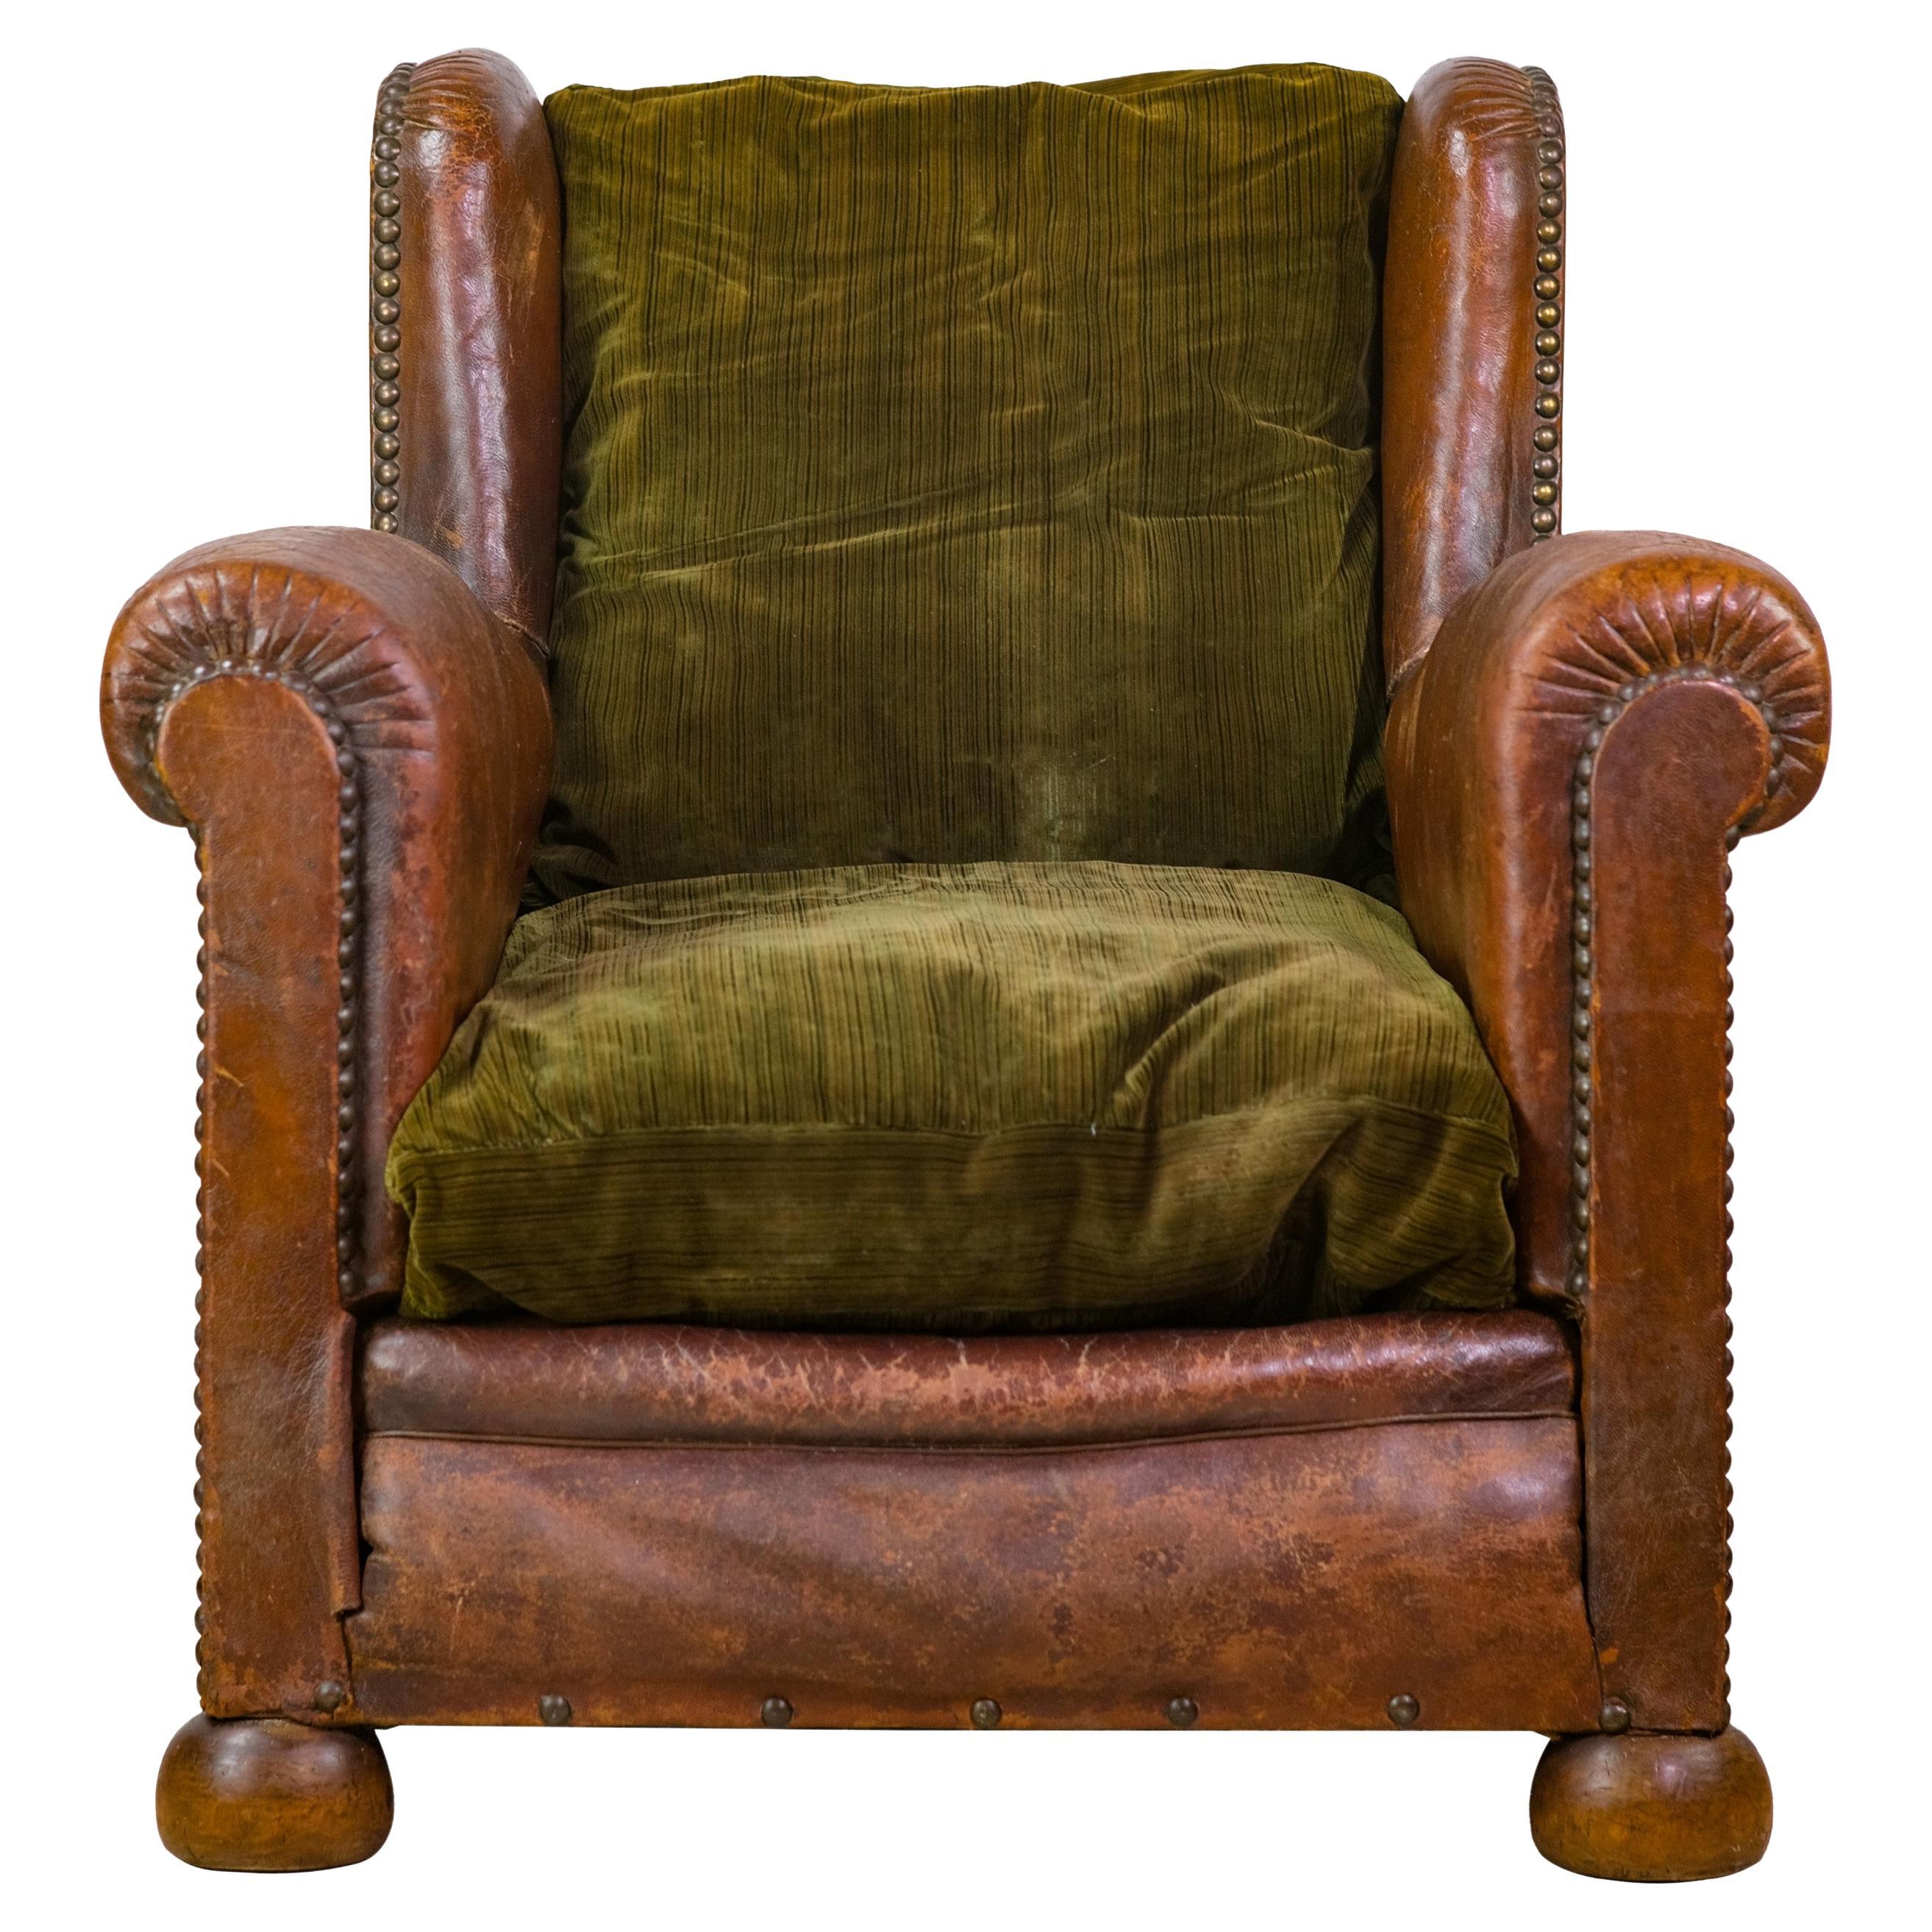 Studs Brown Leather Green Cushion Club Chair Round Wood Feet